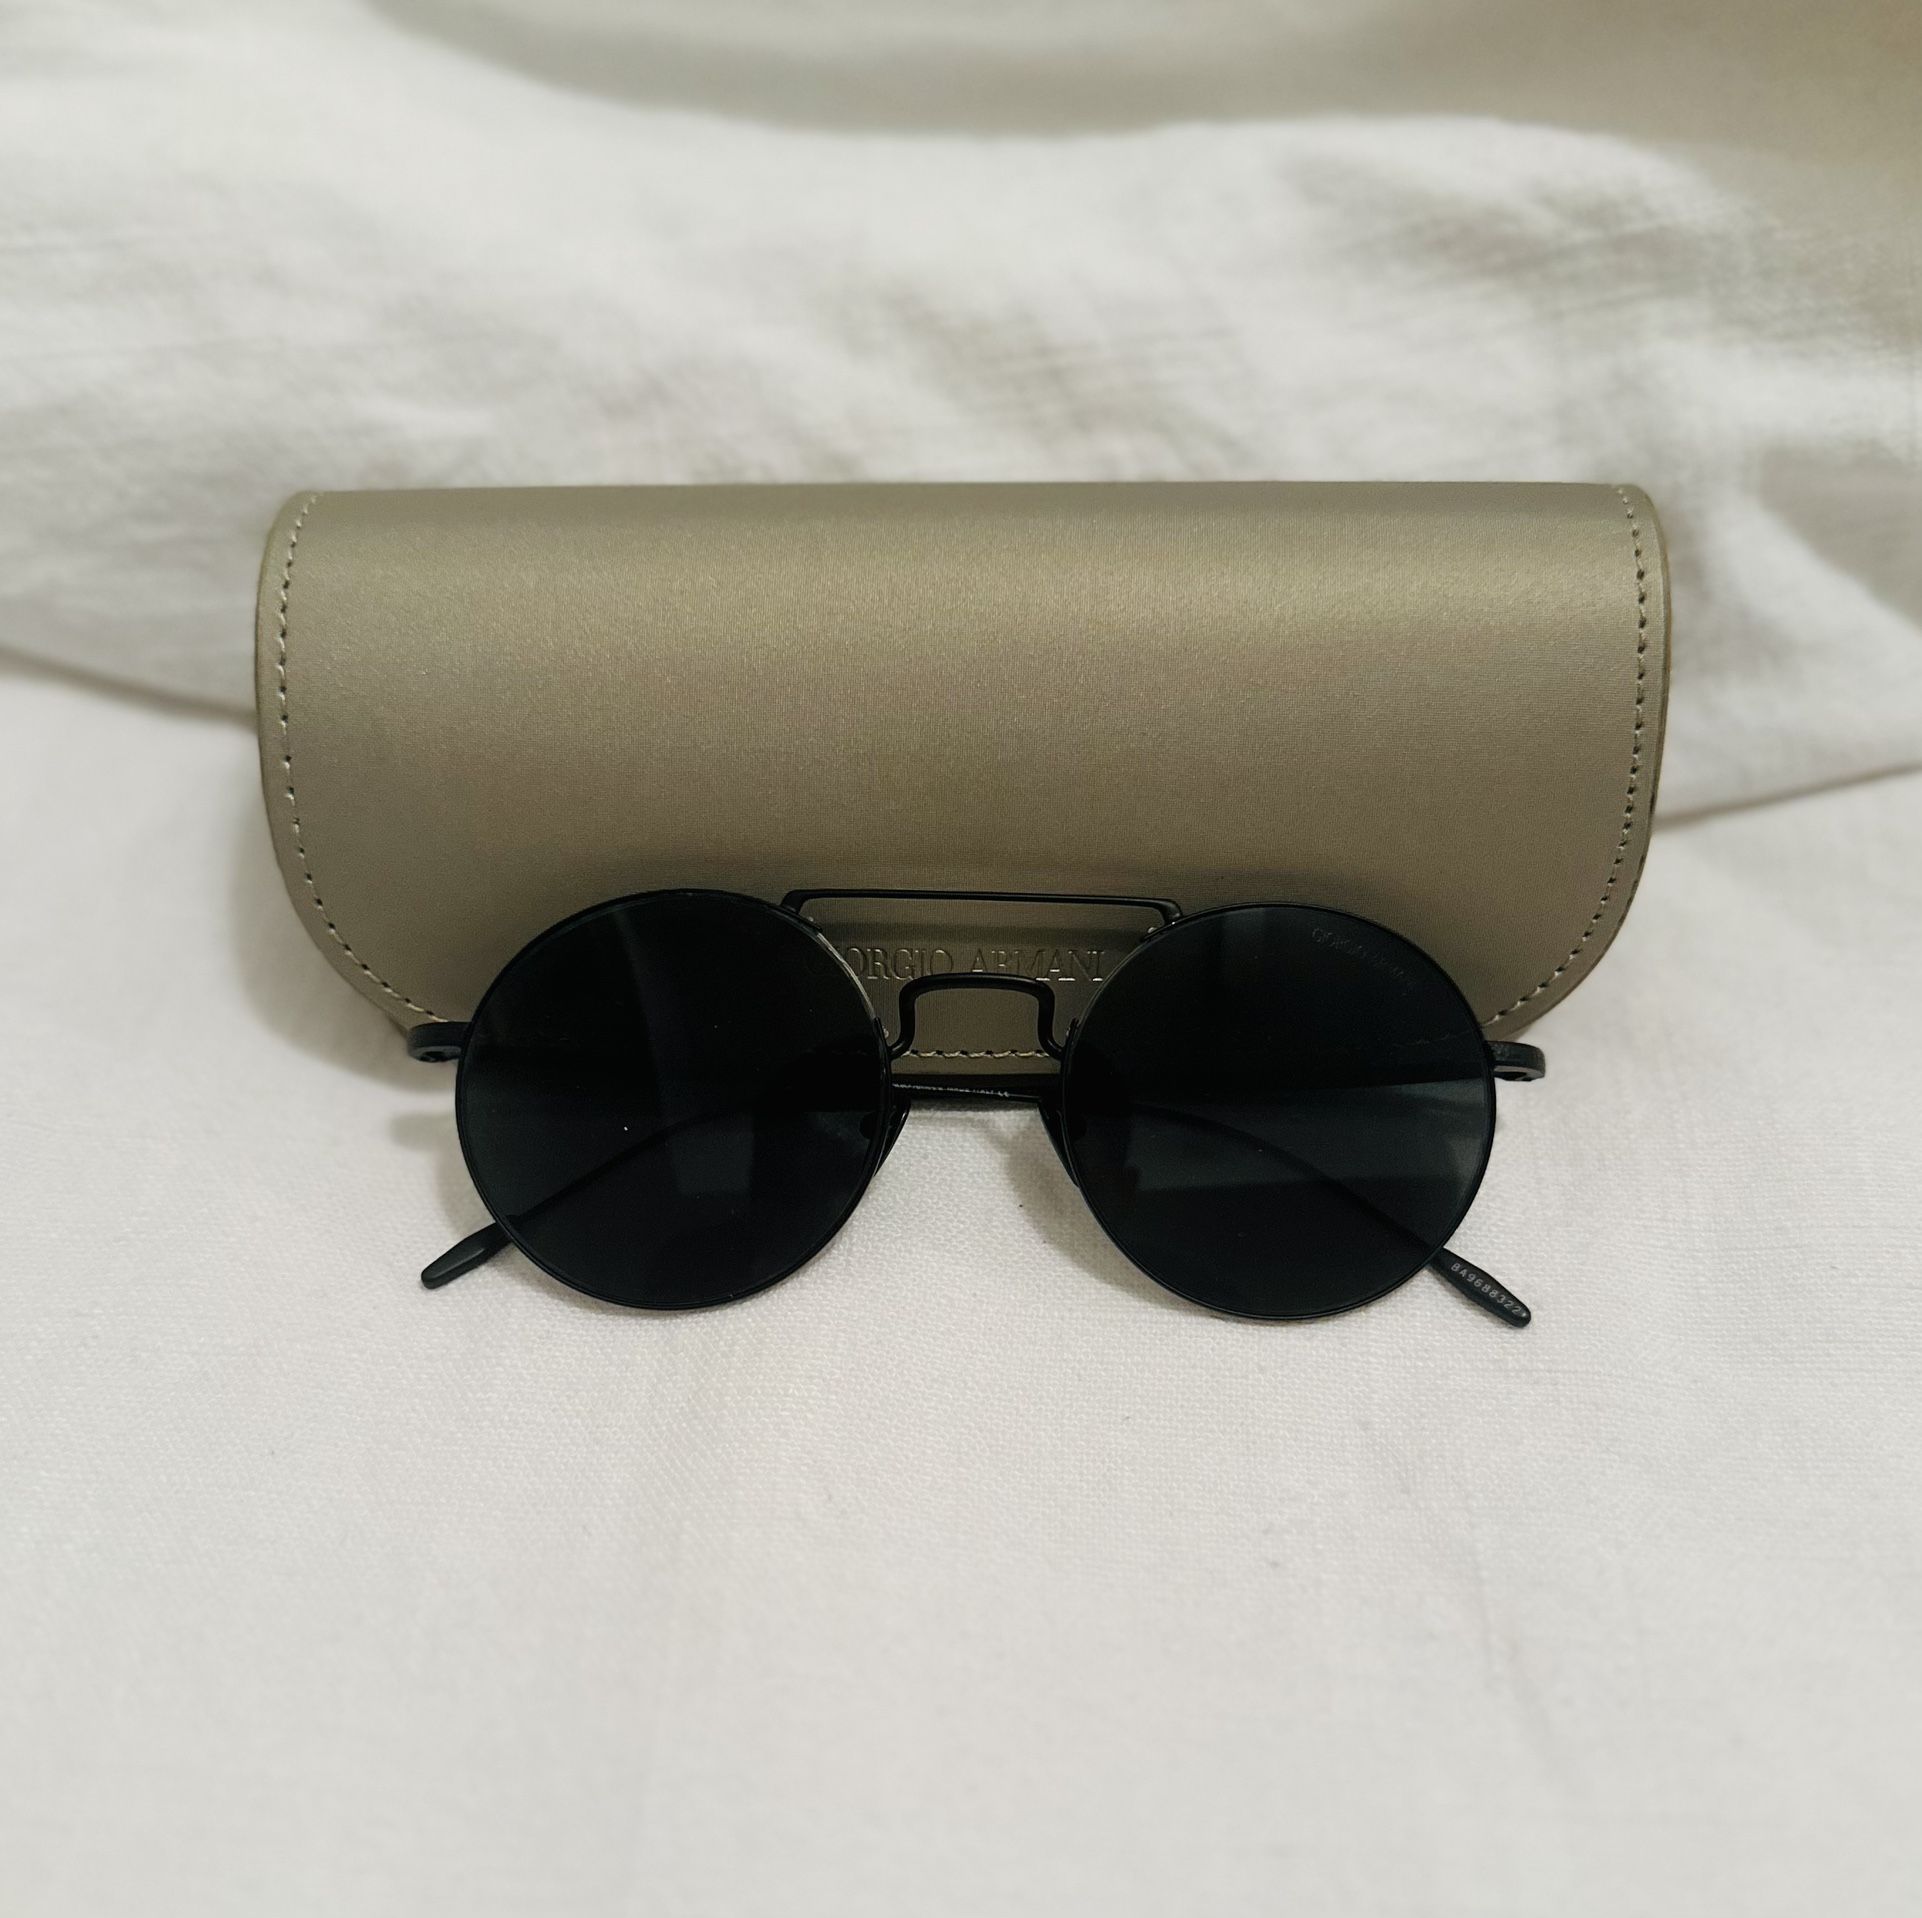 Giorgio Armani Sunglasses - Round lens